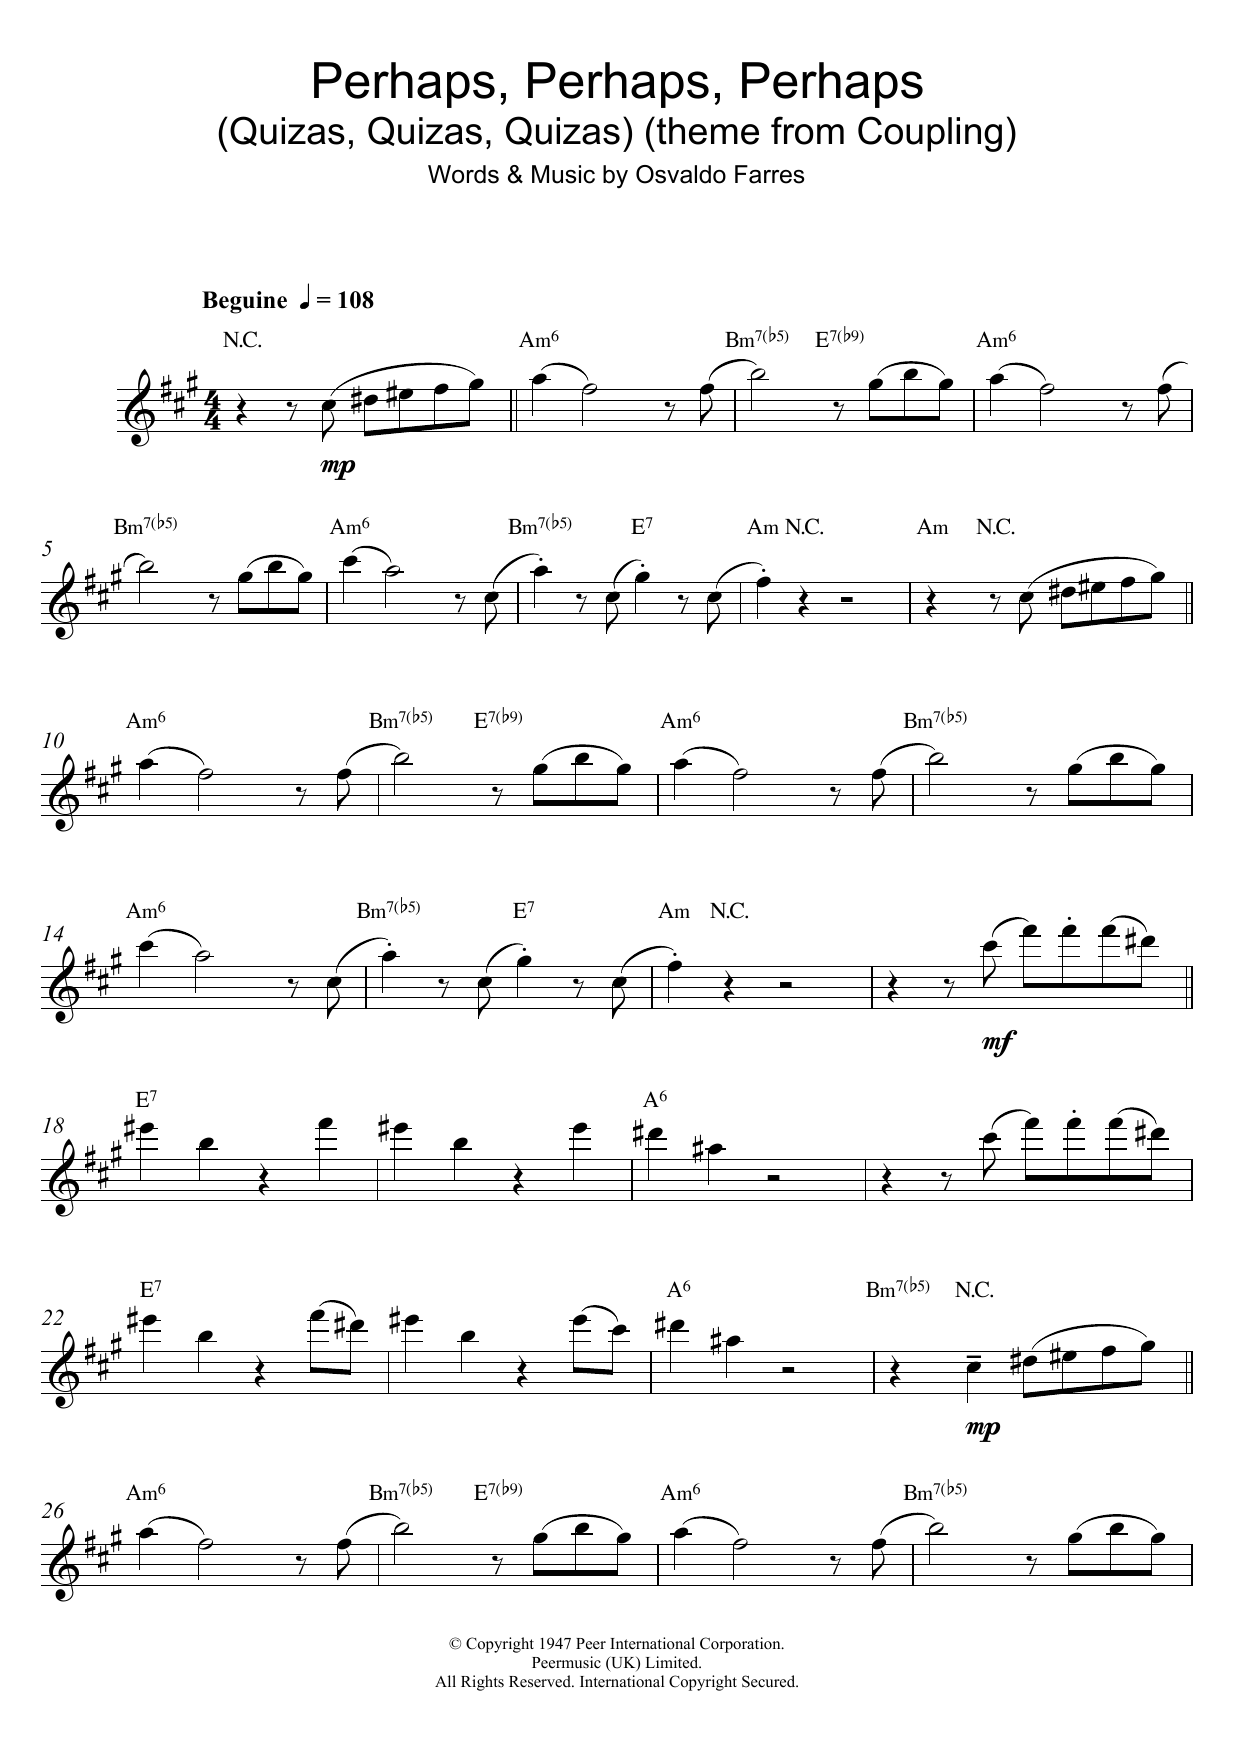 Osvaldo Farres Perhaps, Perhaps, Perhaps (Quizas, Quizas, Quizas) Sheet Music Notes & Chords for Flute - Download or Print PDF